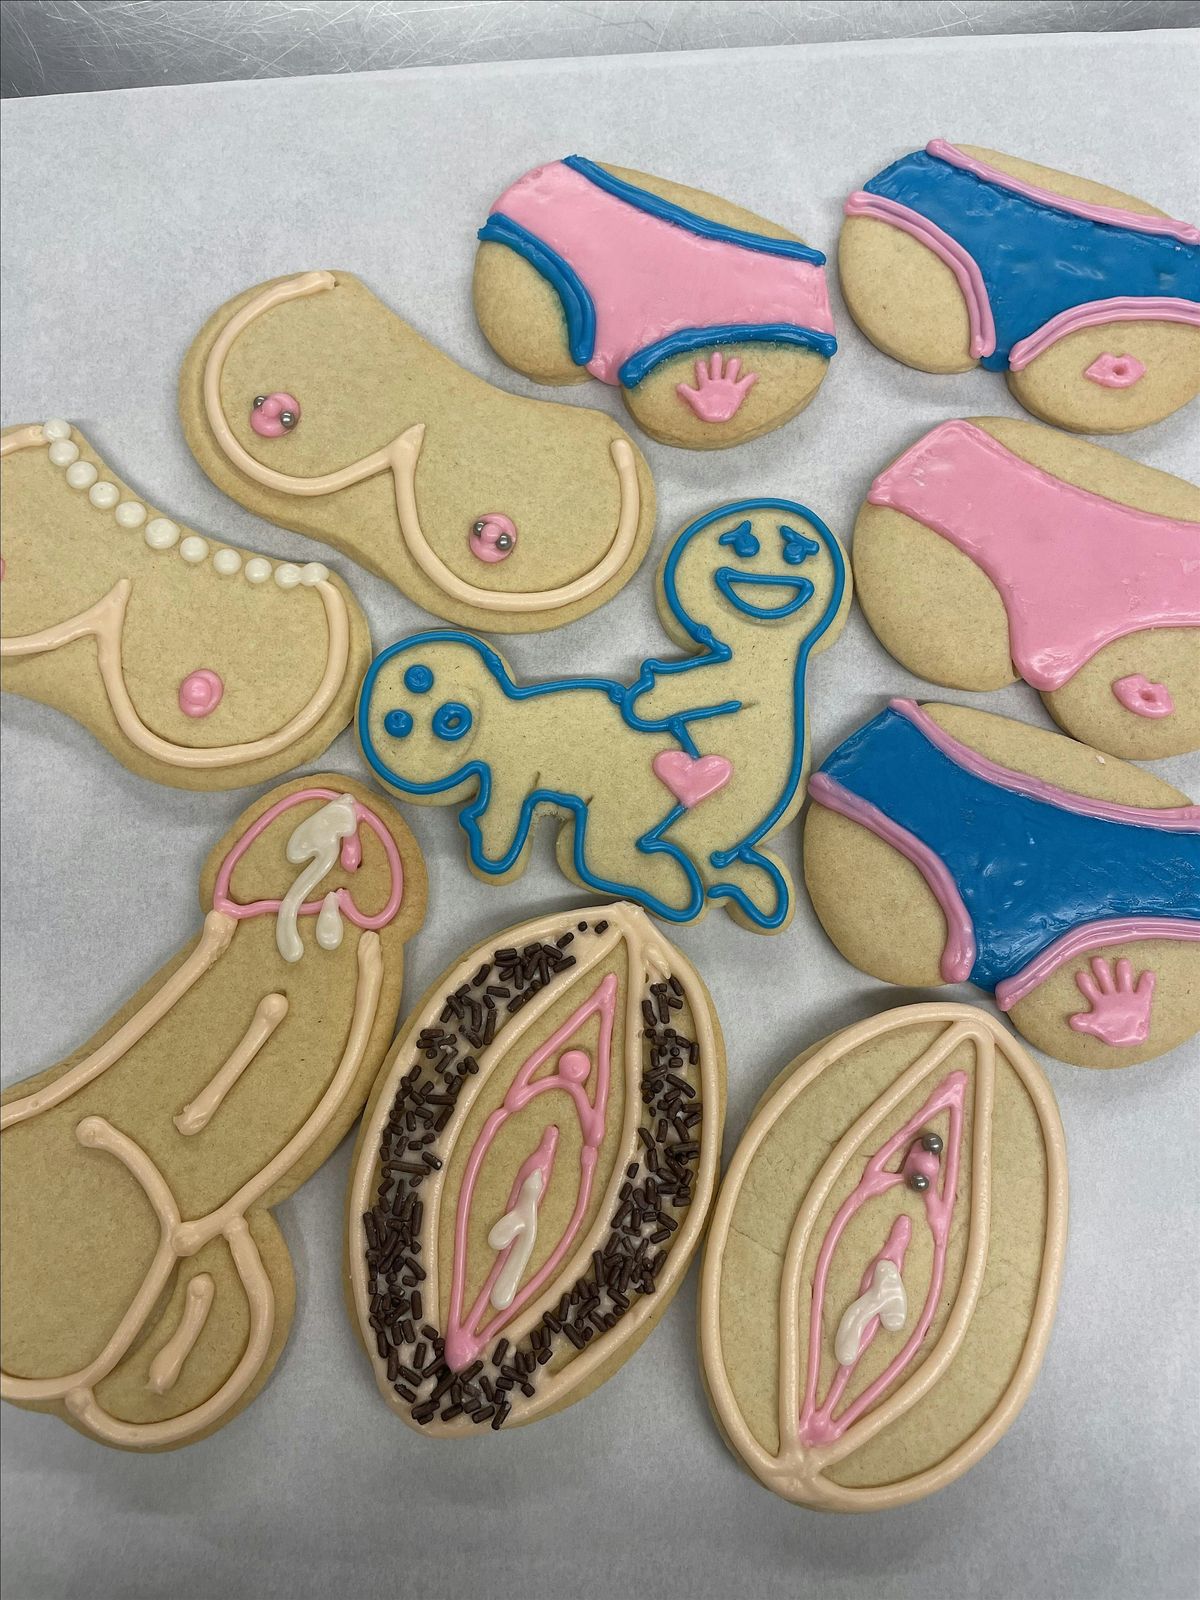 Naughty Cookie Decorating Extravaganza!